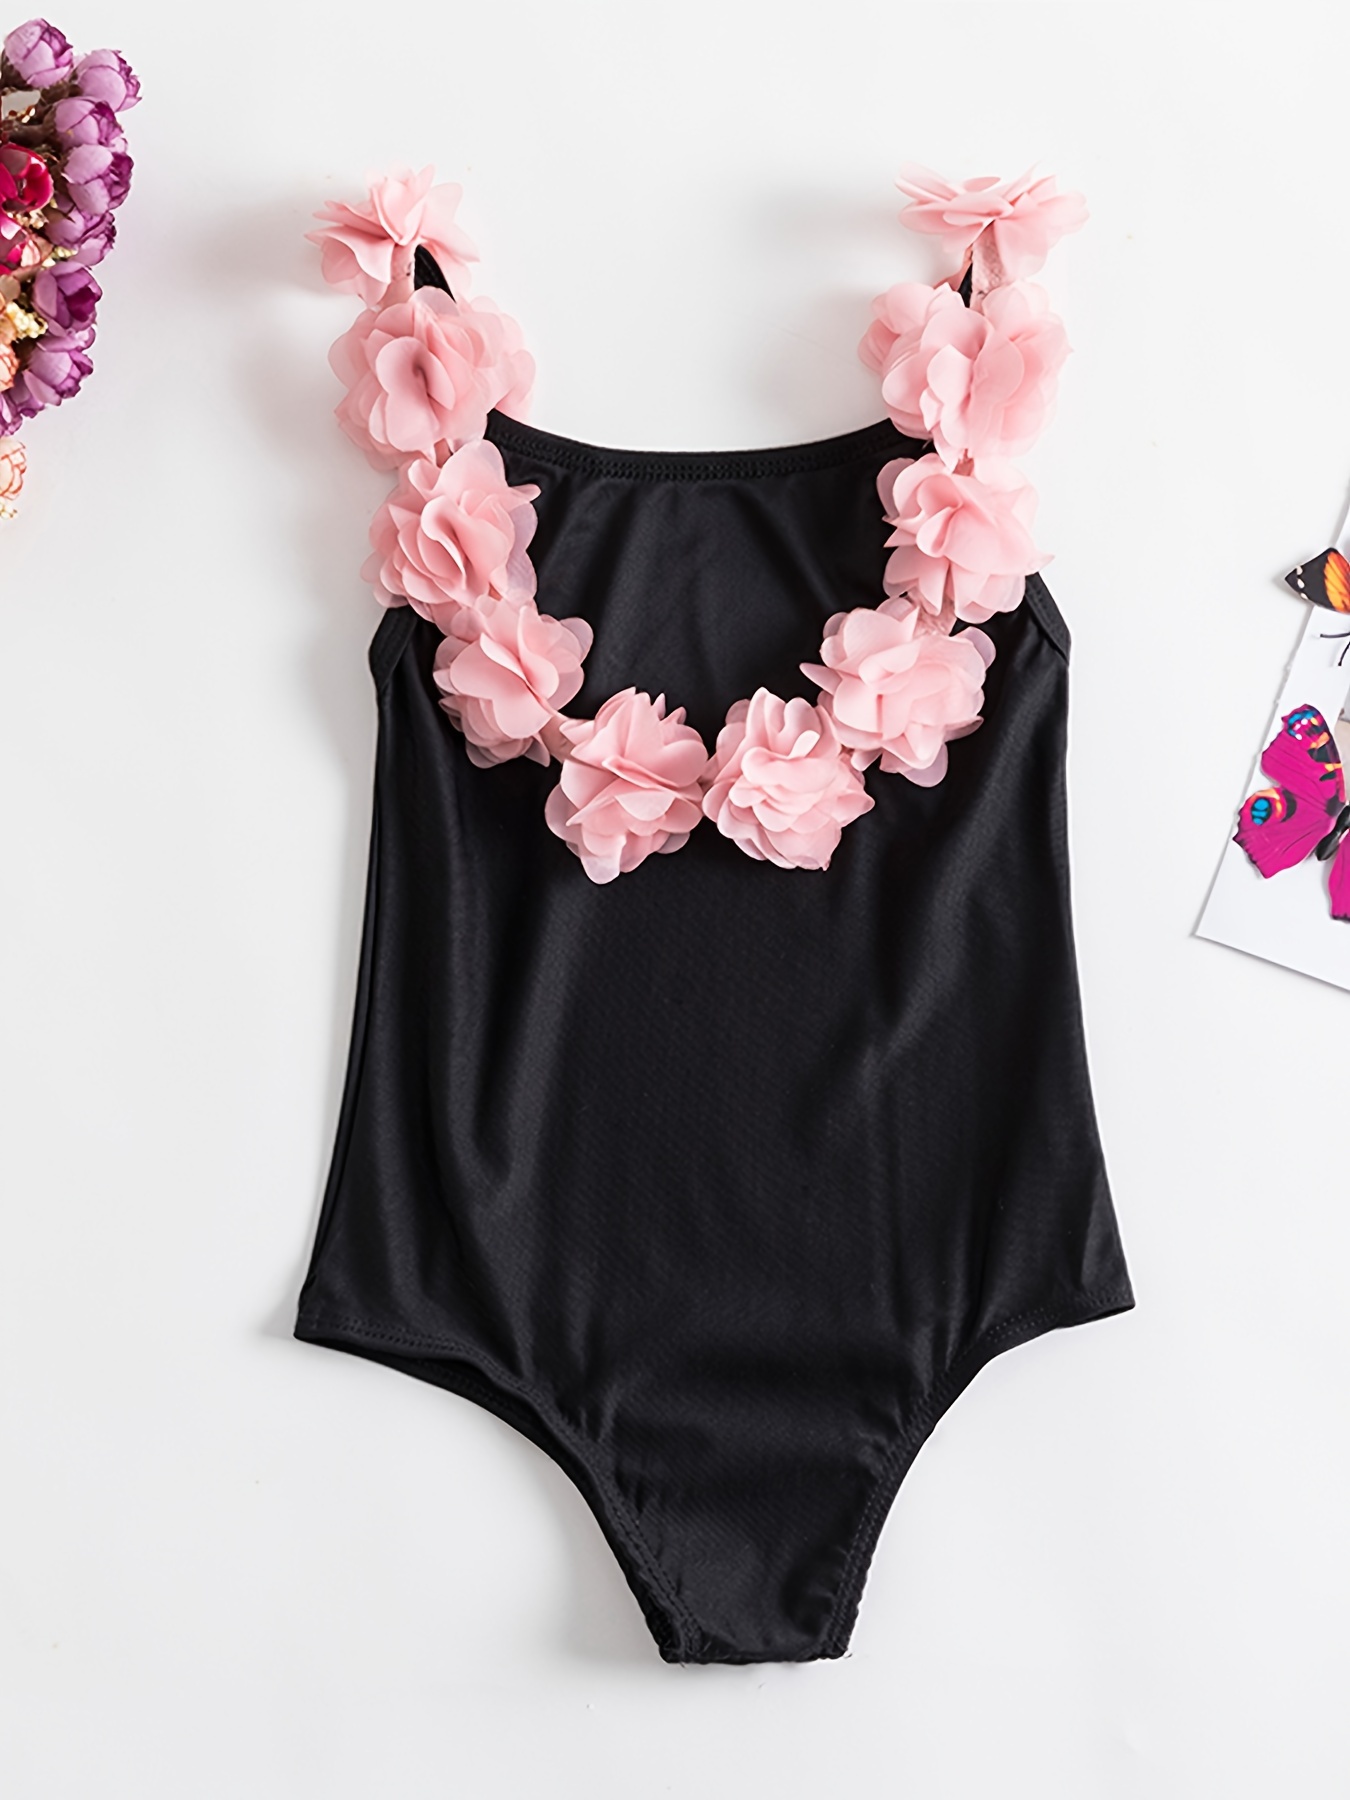 Deko Girl's Full Swimming Suit - Black&Pink 